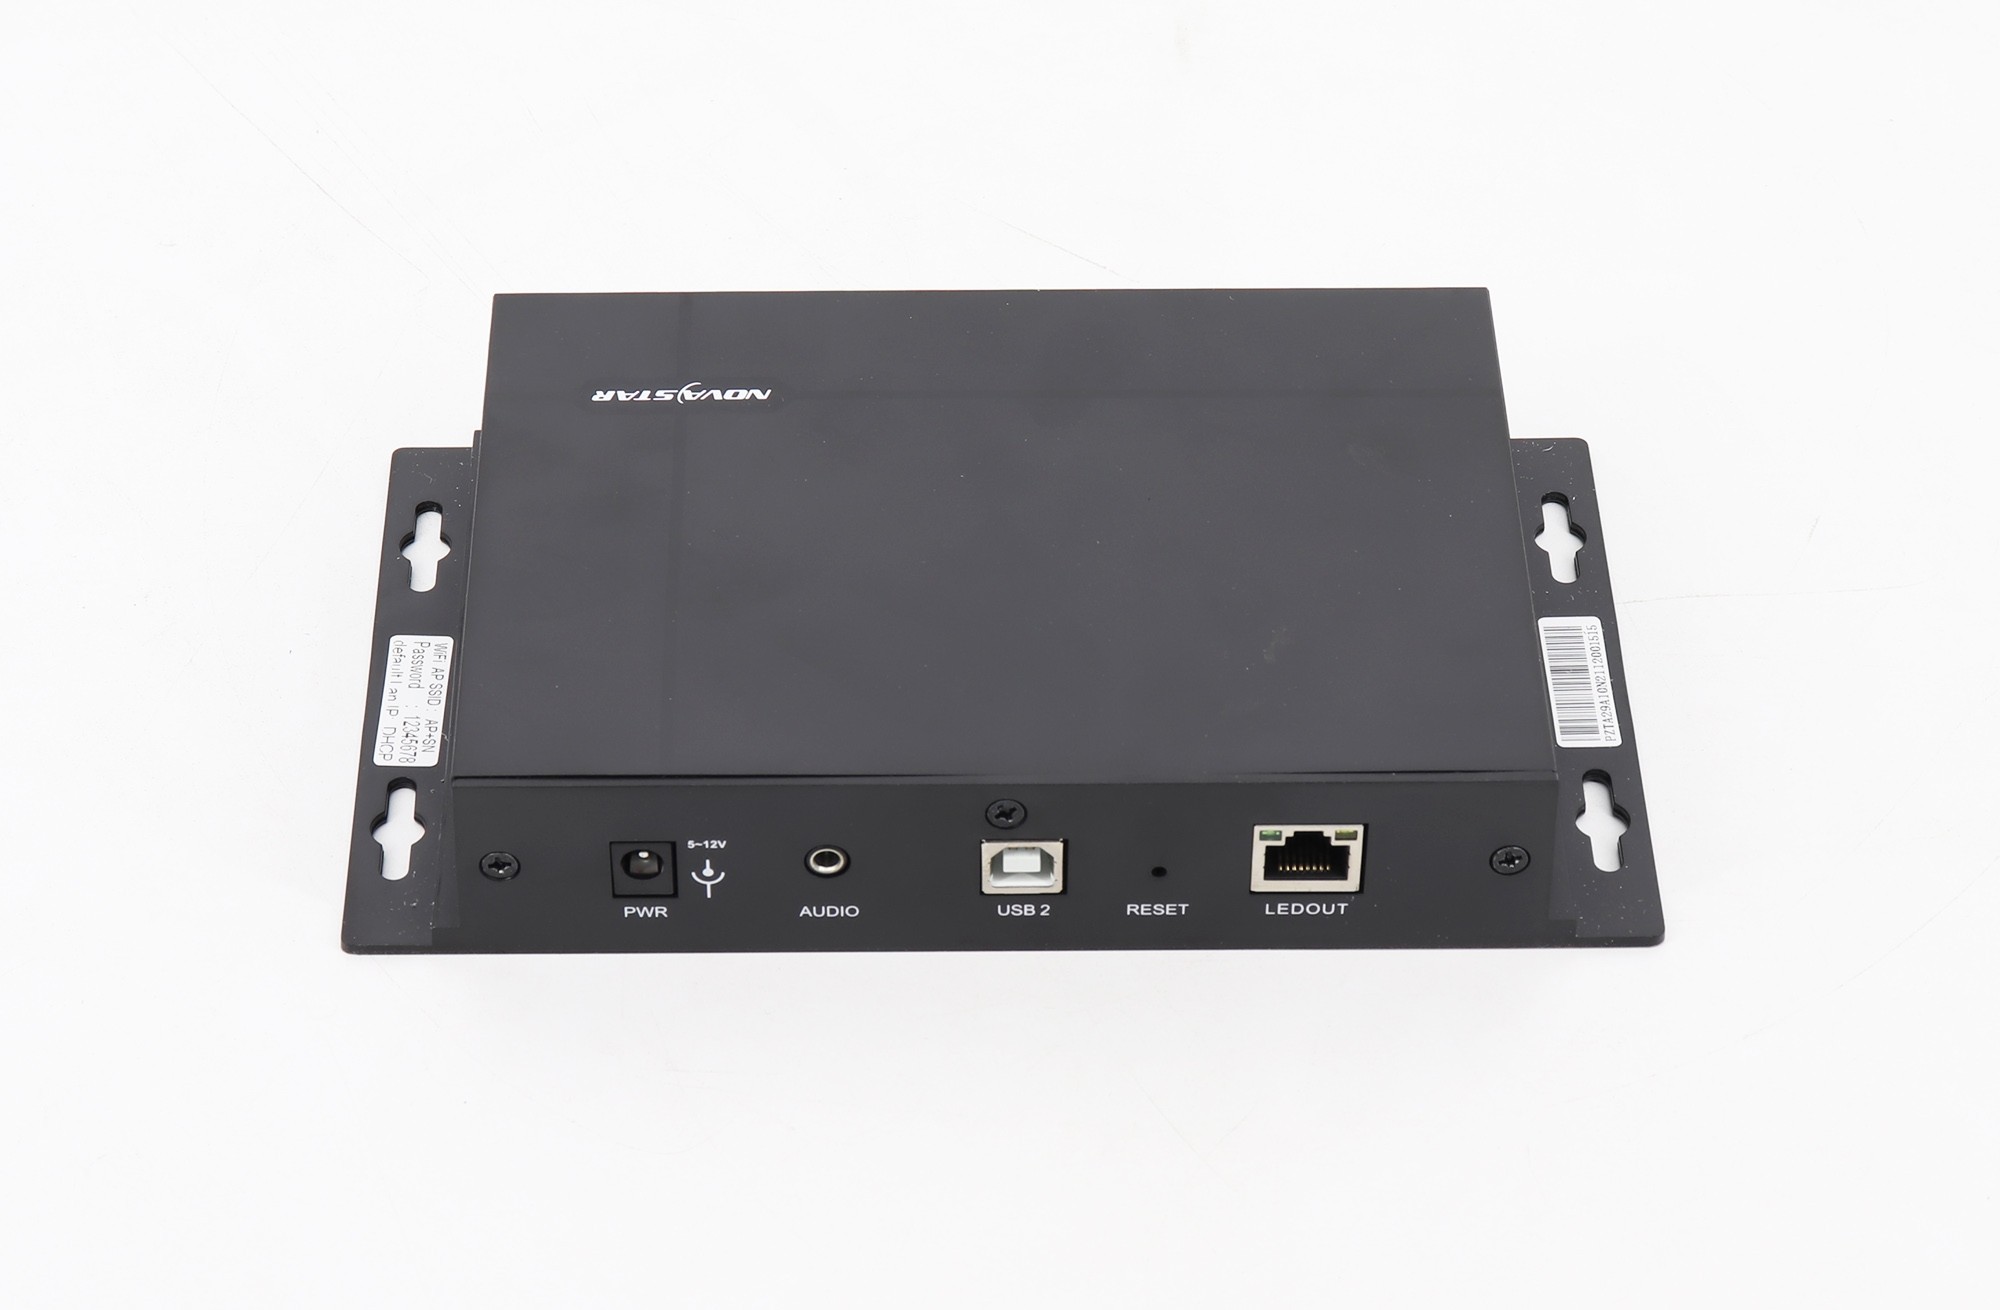 Novastar TB2-4G LED Display Video Control Box